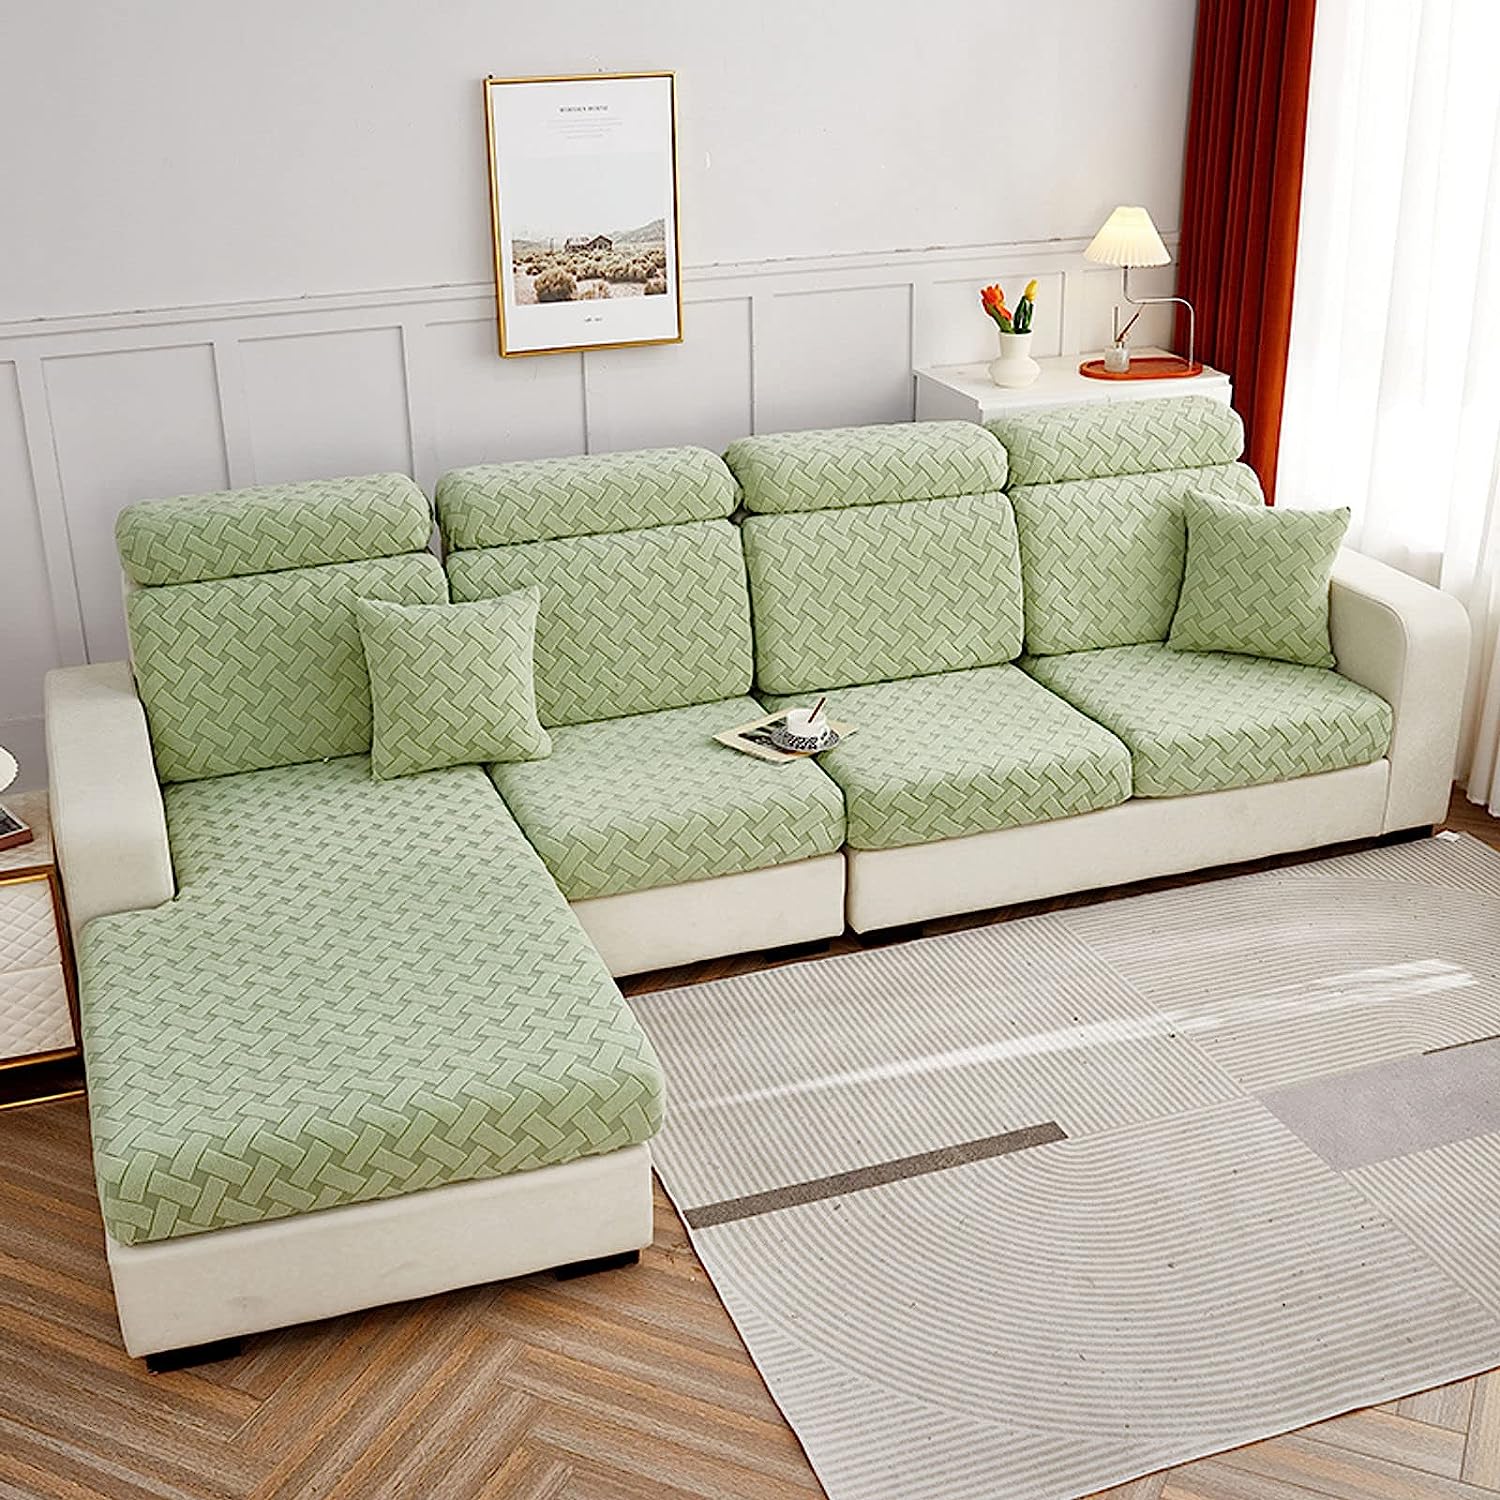 Sofa Cushion Cover - Avocado Green - Soft Elastic Jacquard Weave